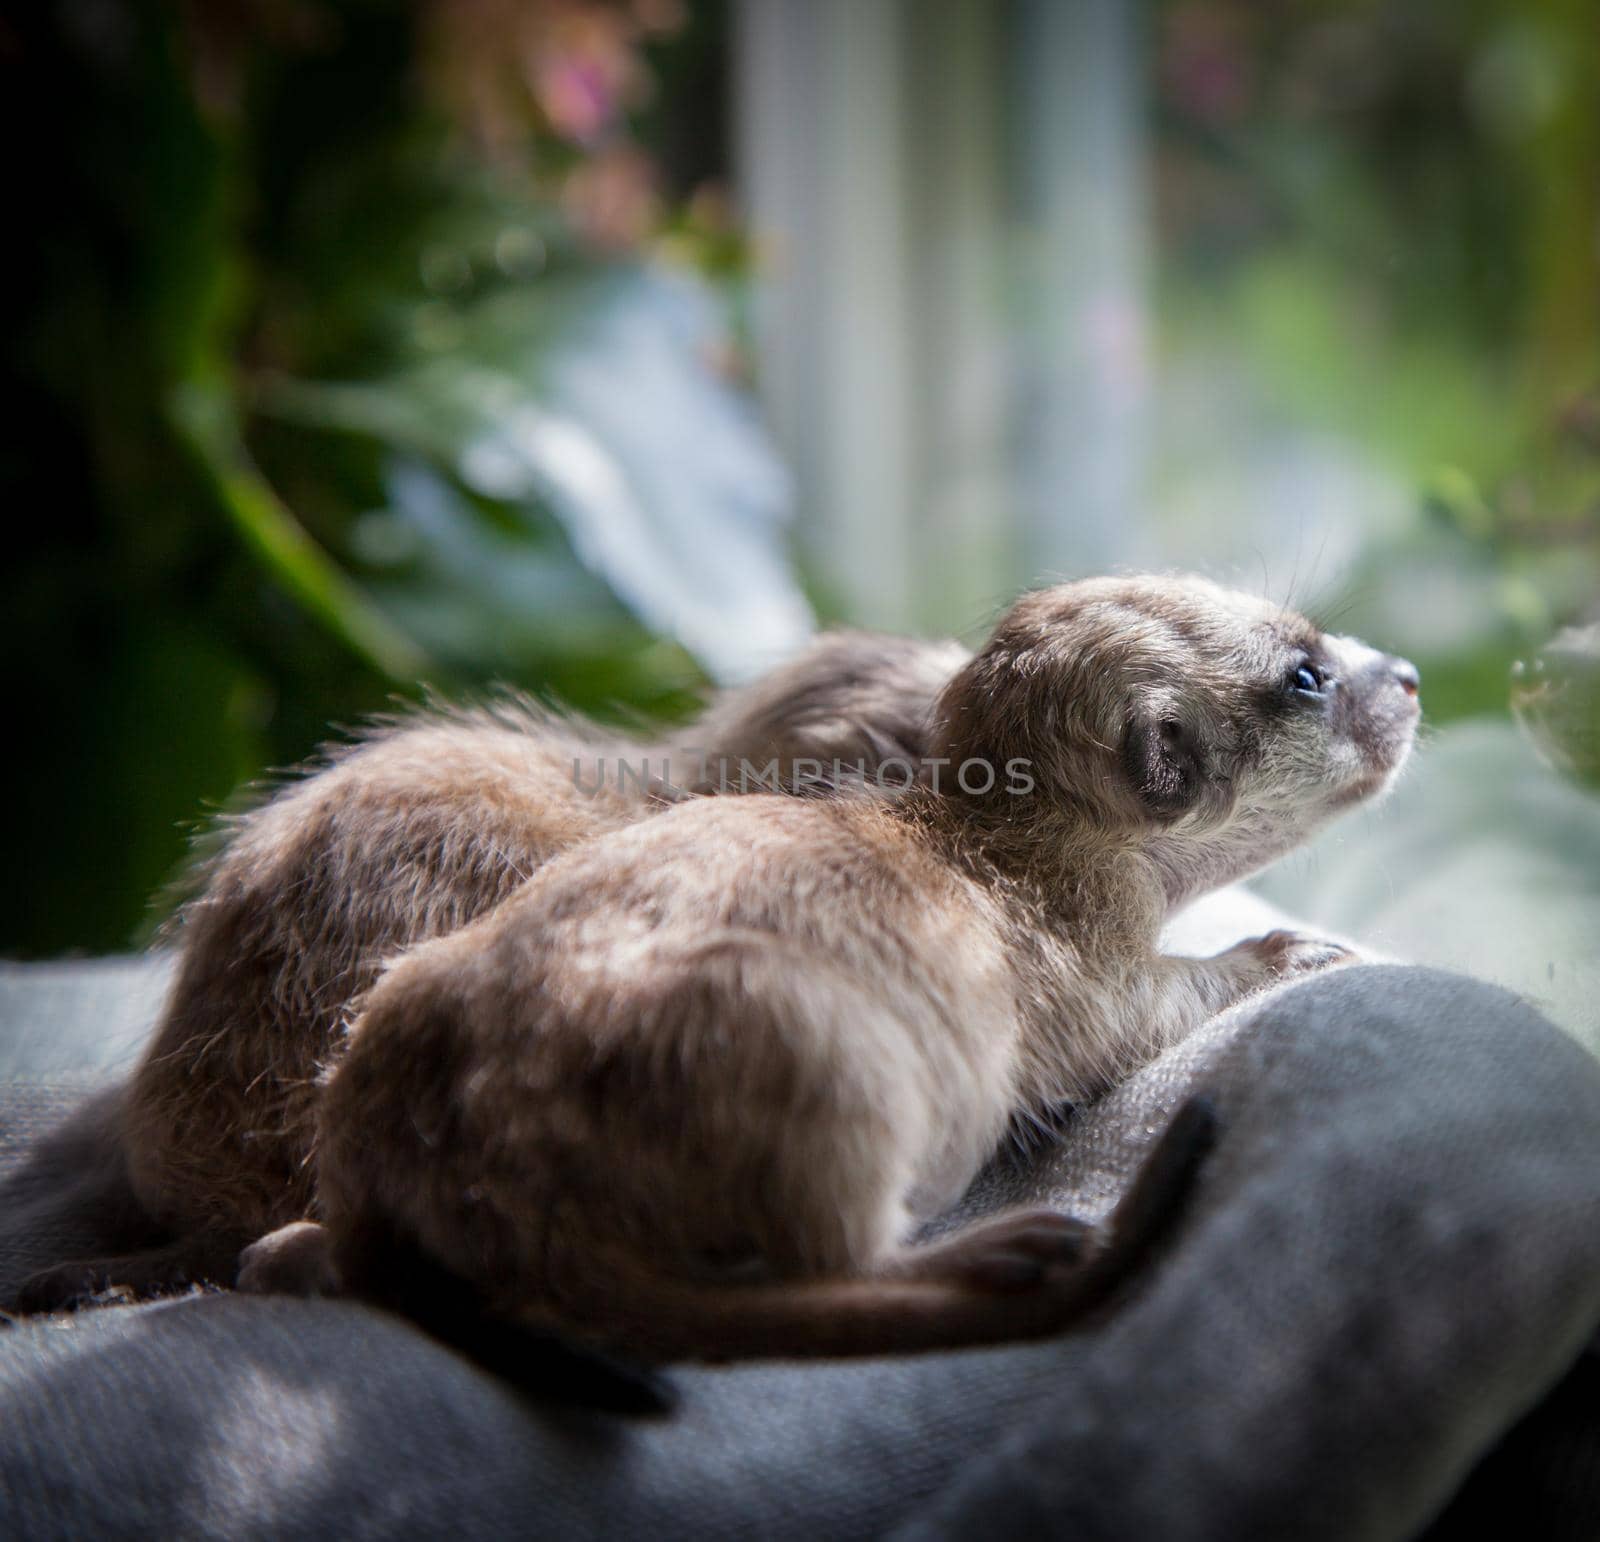 The meerkat or suricate cub, Suricata suricatta, in front of window